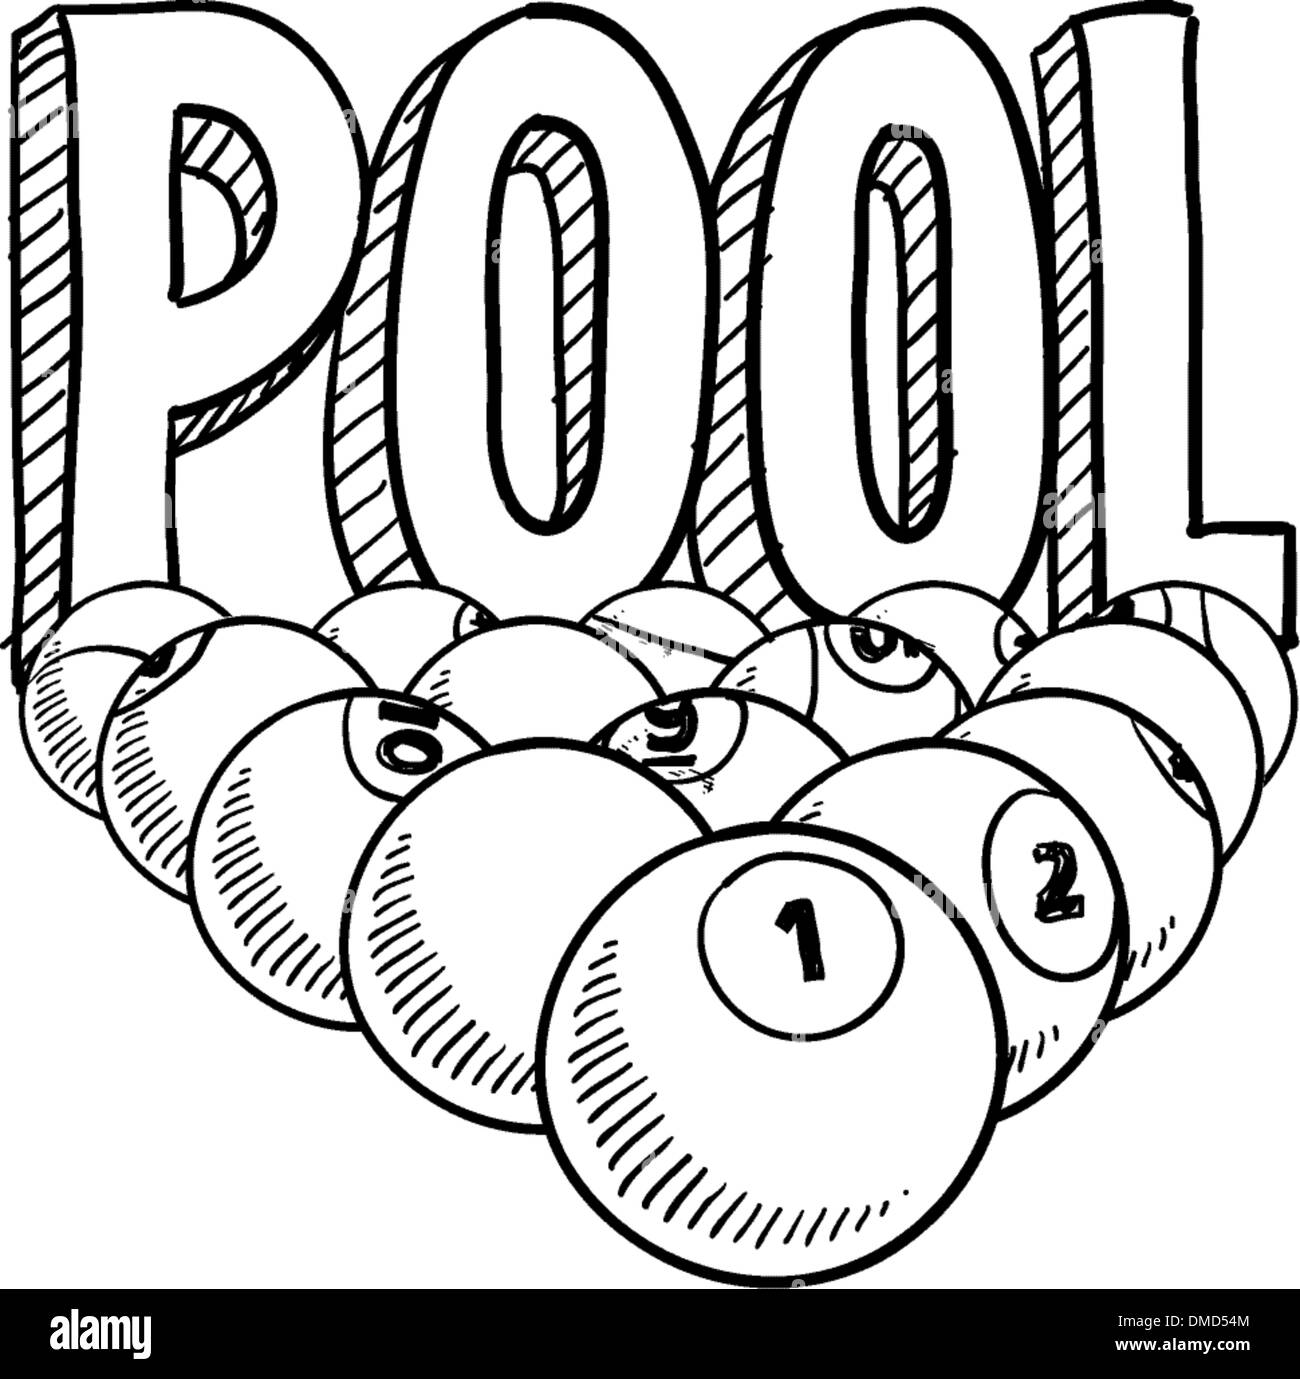 Pool table balls break Black and White Stock Photos & Images - Alamy